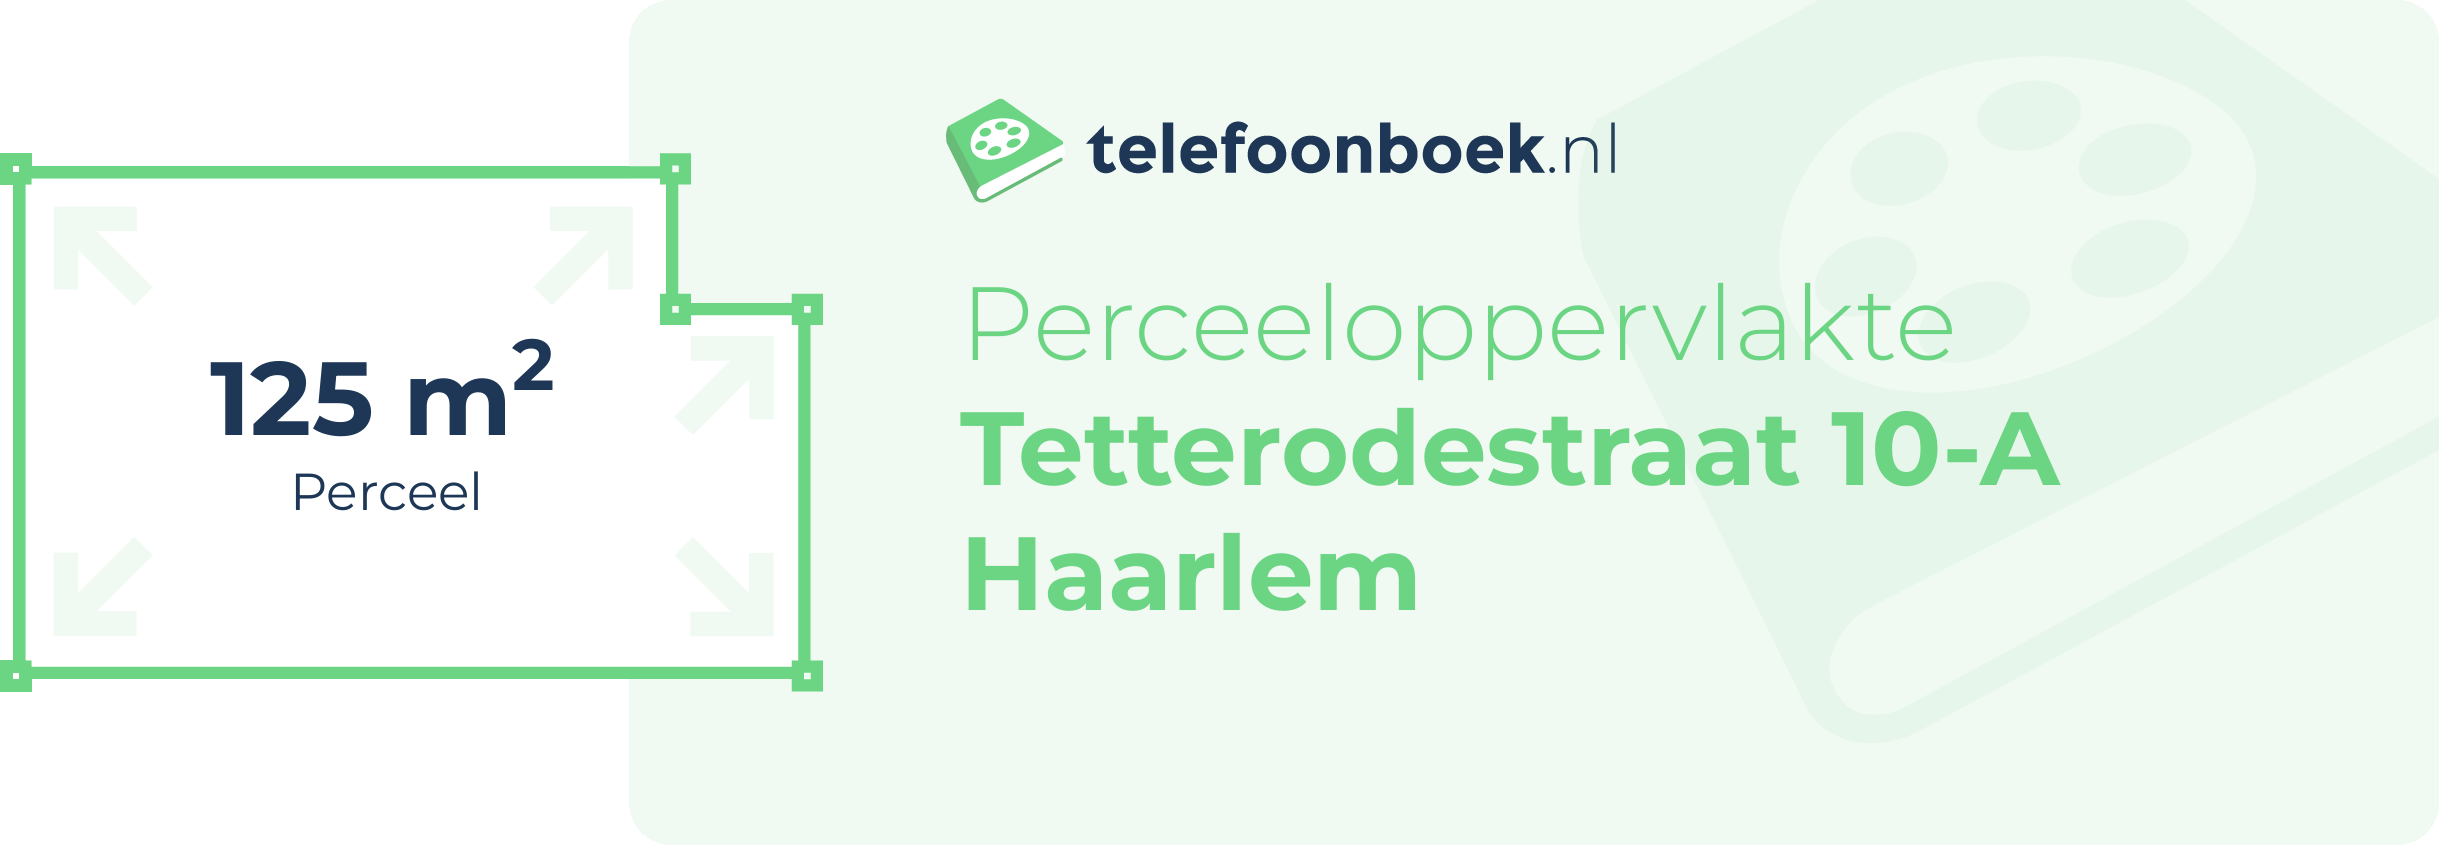 Perceeloppervlakte Tetterodestraat 10-A Haarlem